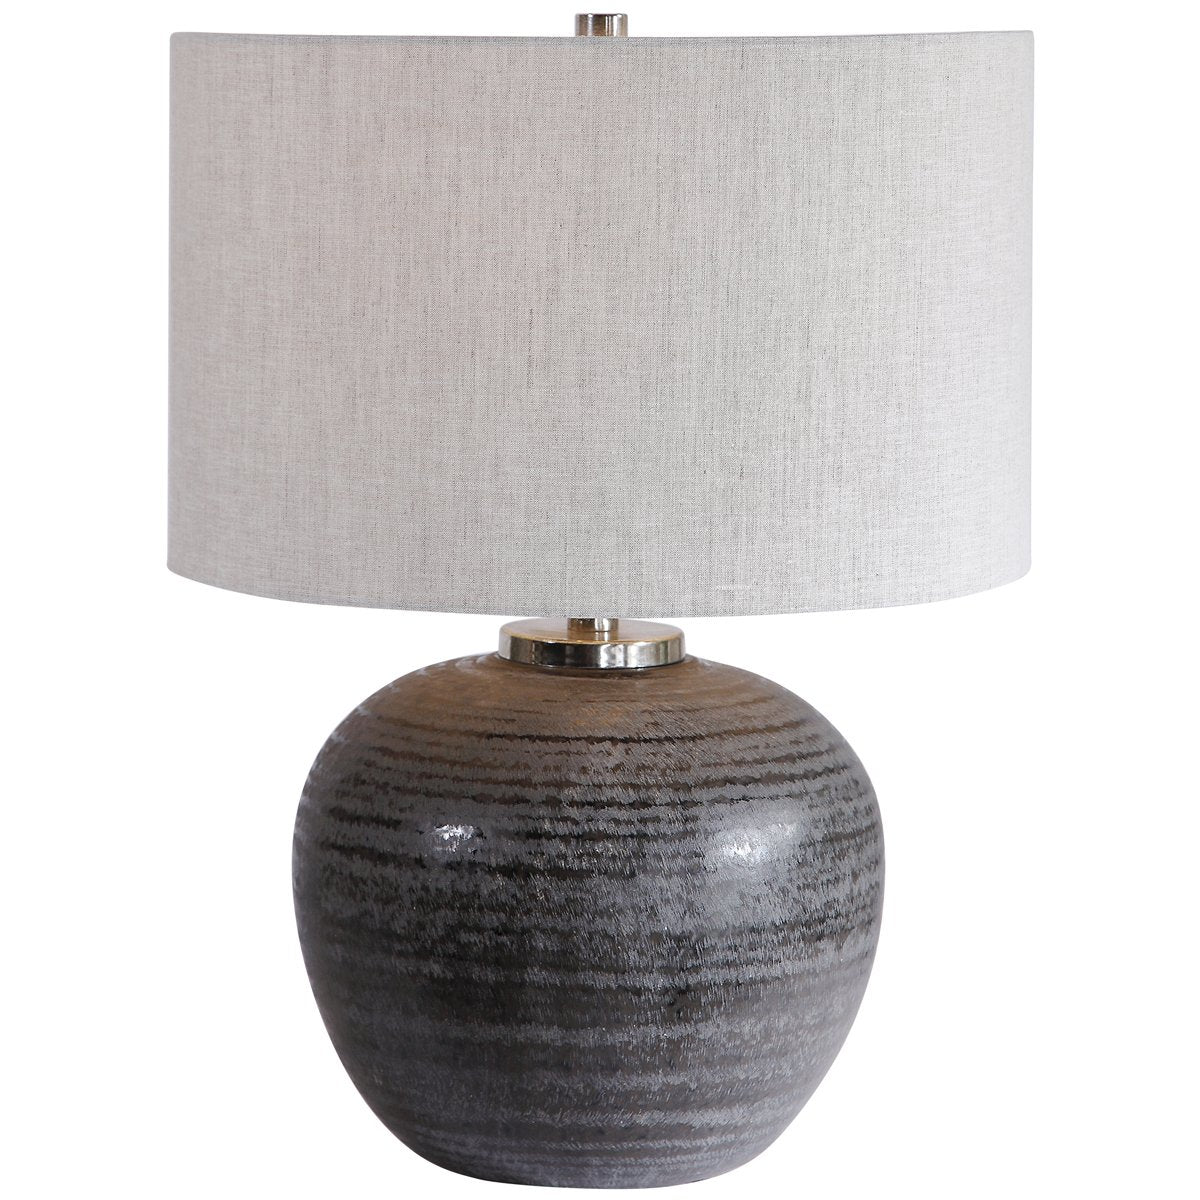 Uttermost Mikkel Charcoal Table Lamp